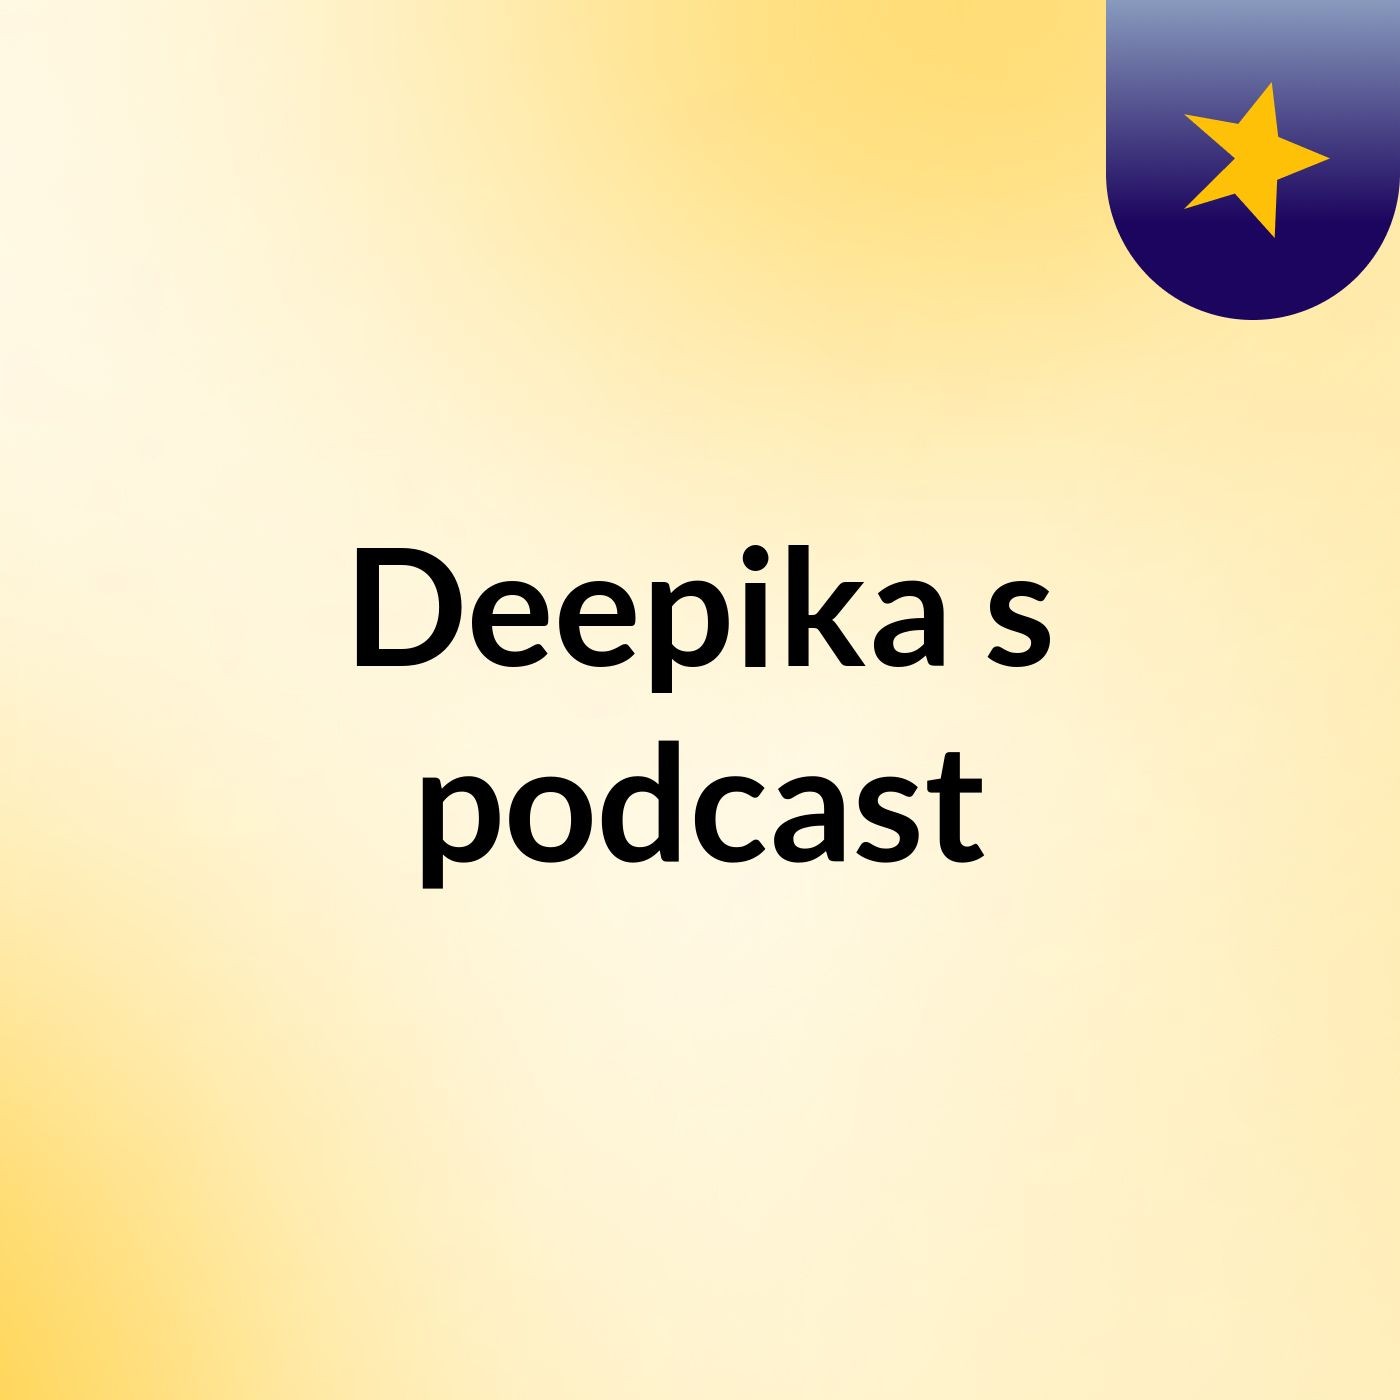 Deepika's podcast